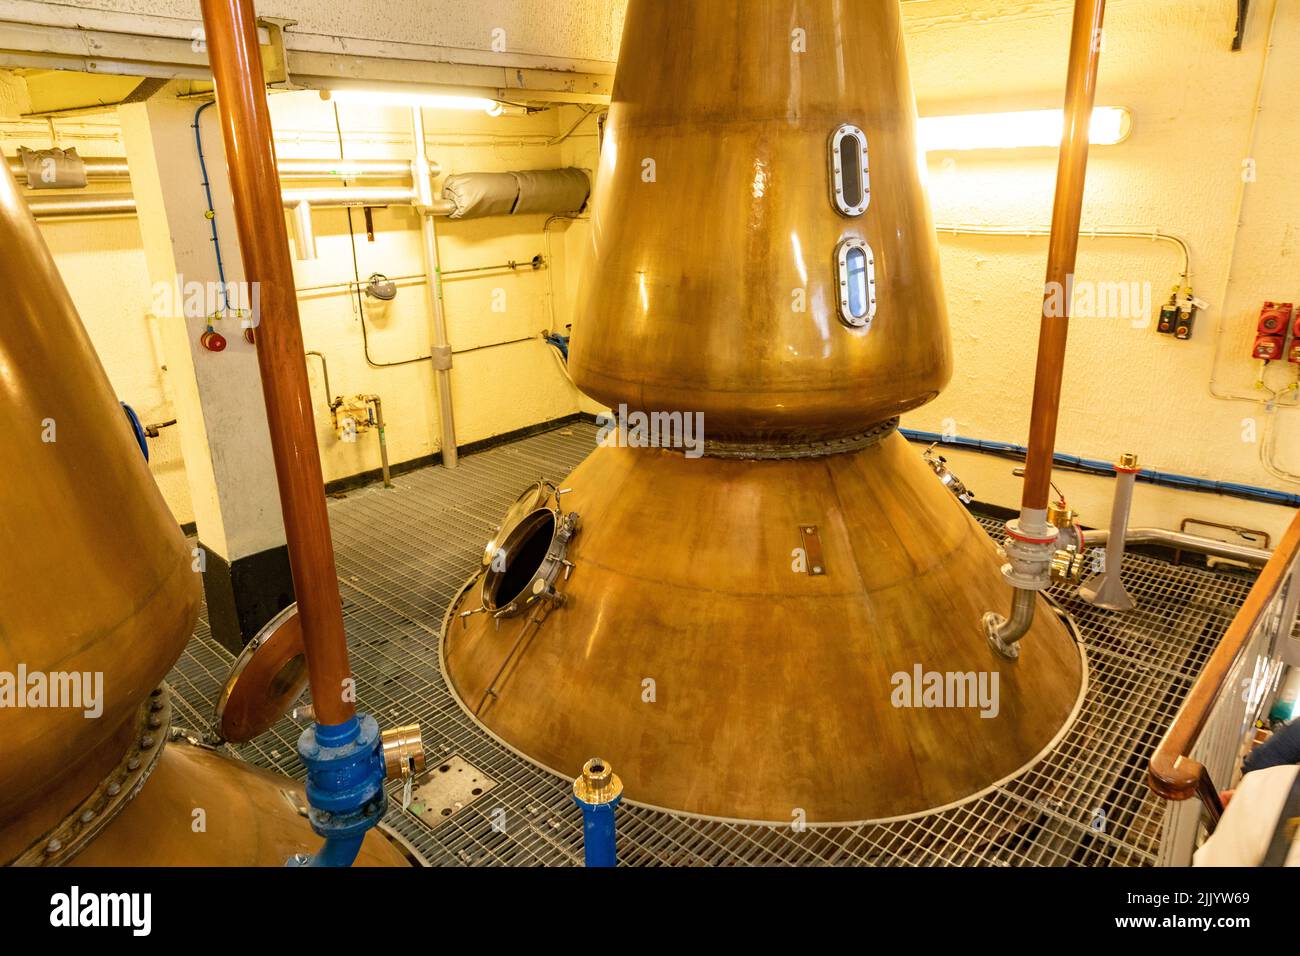 Oban whisky distillery and copper stills in the still room of the distillery to produce single malt whisky,Oban, Scottish Highlands,Scotland,UK Stock Photo